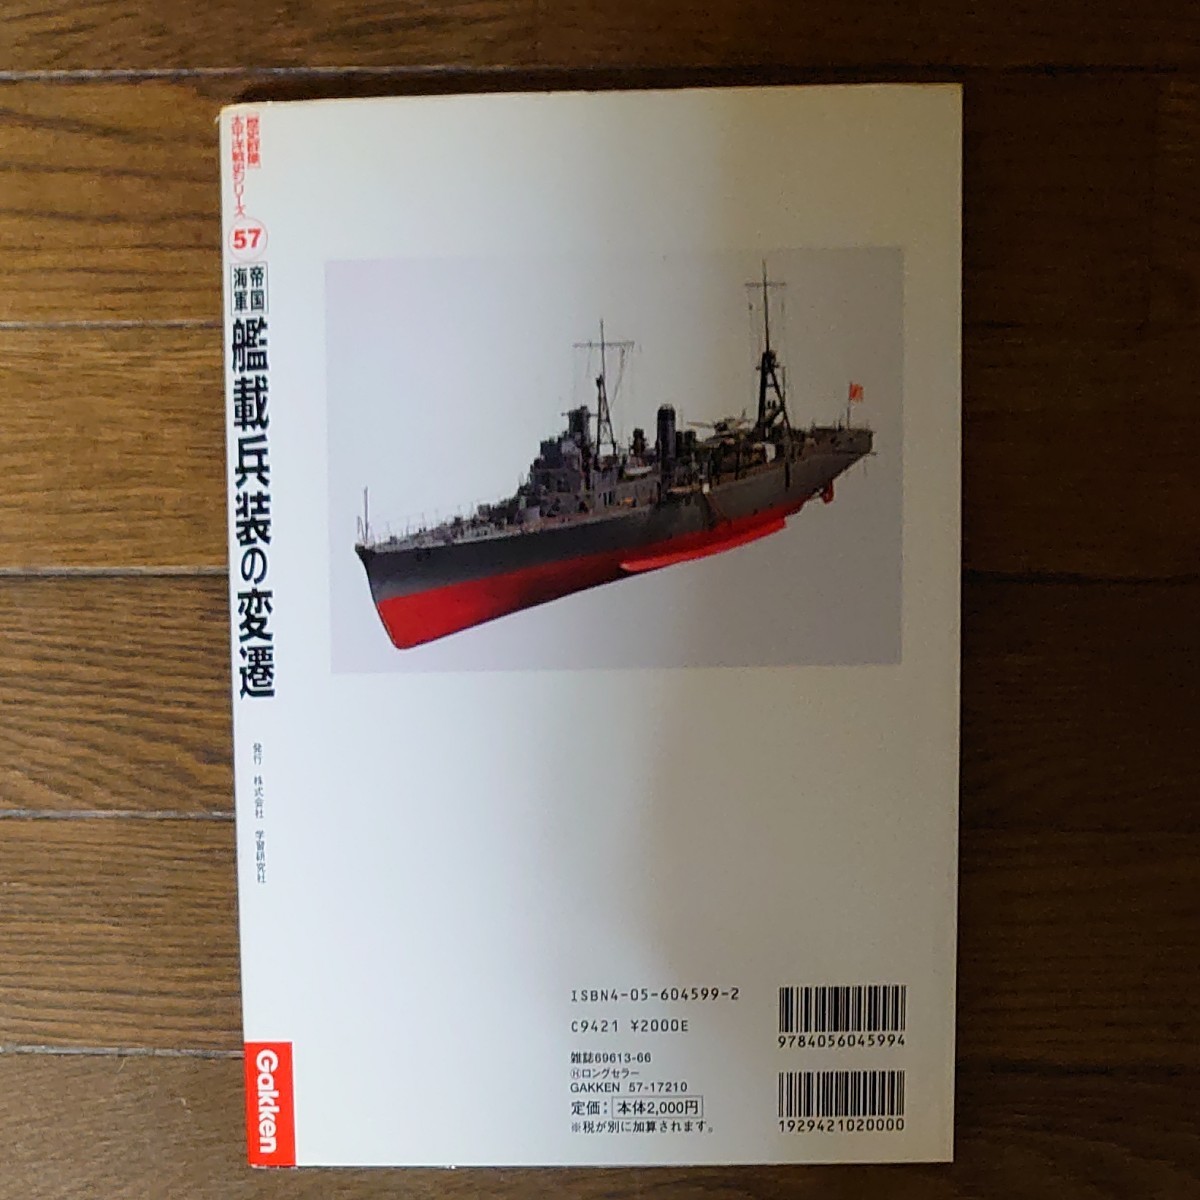 歴史群像 太平洋戦史シリーズvol,57 真実の艦艇史3 帝国艦載兵器の変遷 